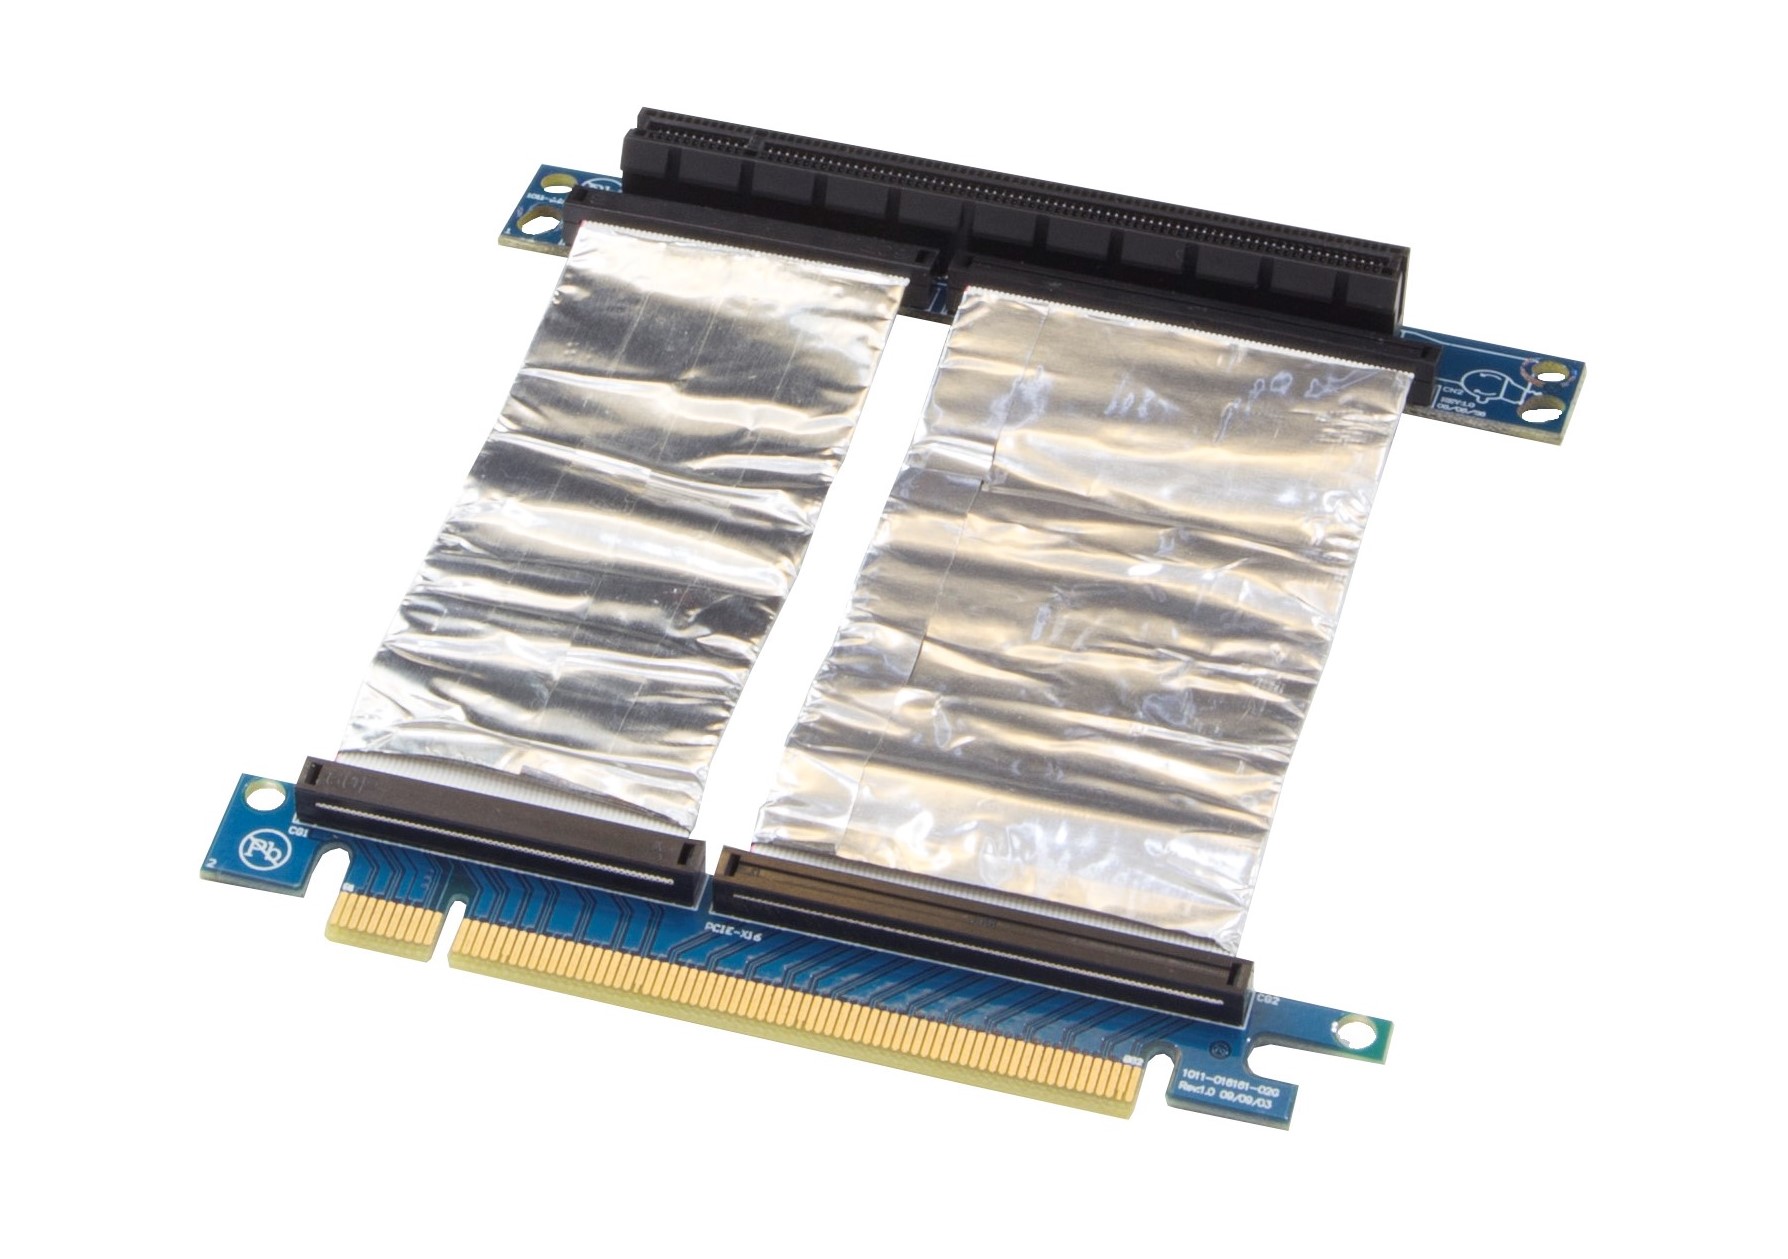 PCIe X16 Riser Card 100mm  |Products|Accessories|PCI-Express Riser Card